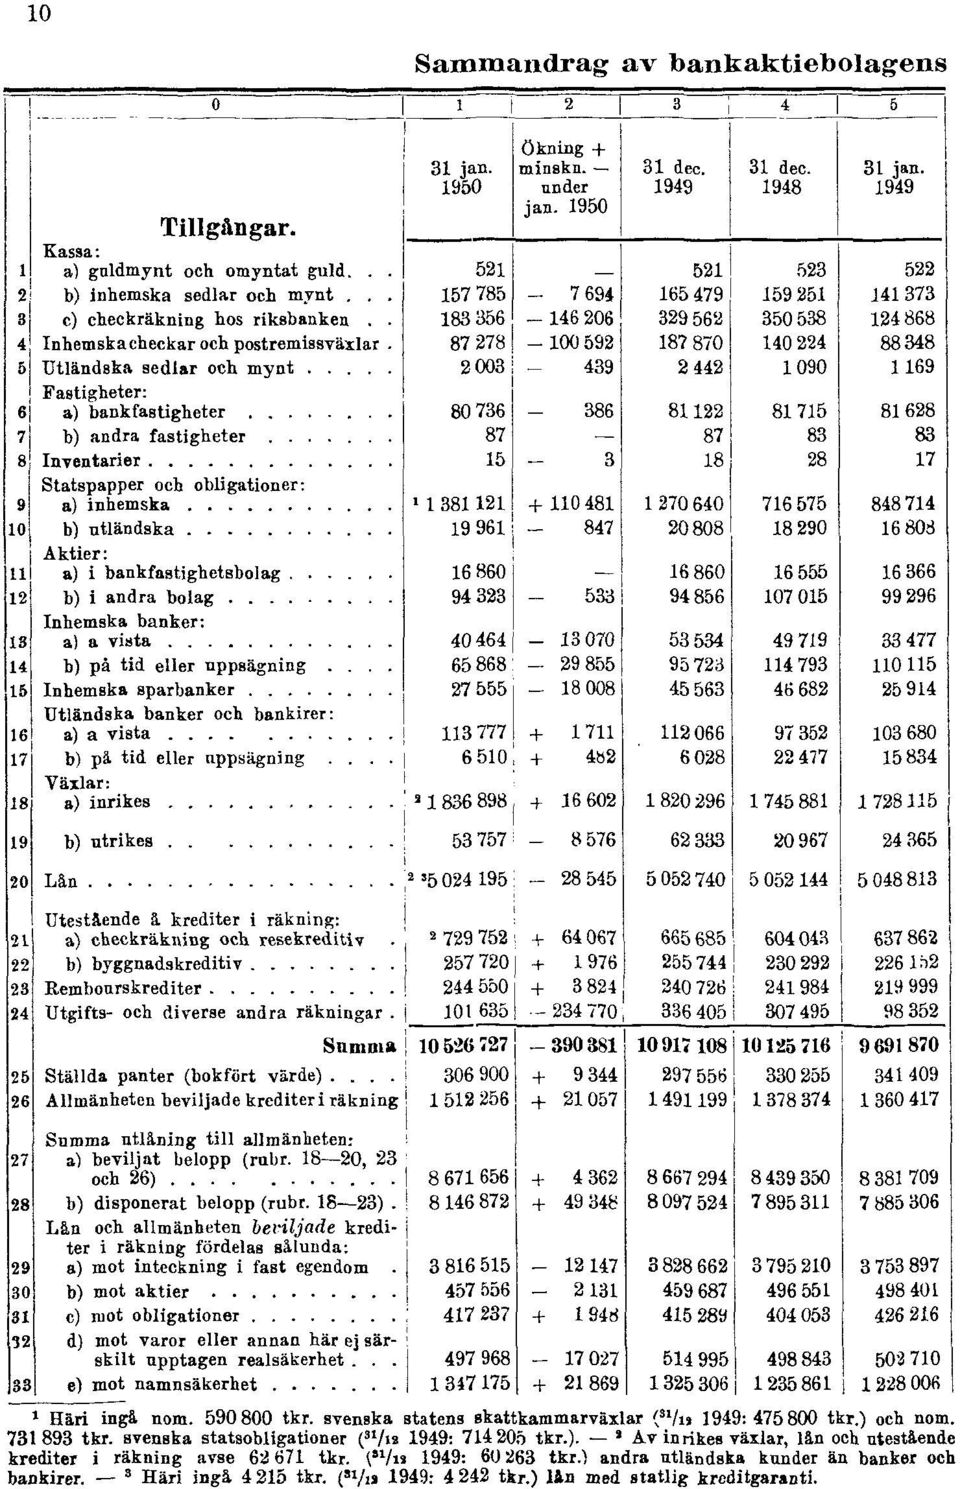 svenska statsobligationer ( 31 /12 1949: 714 205 tkr.).